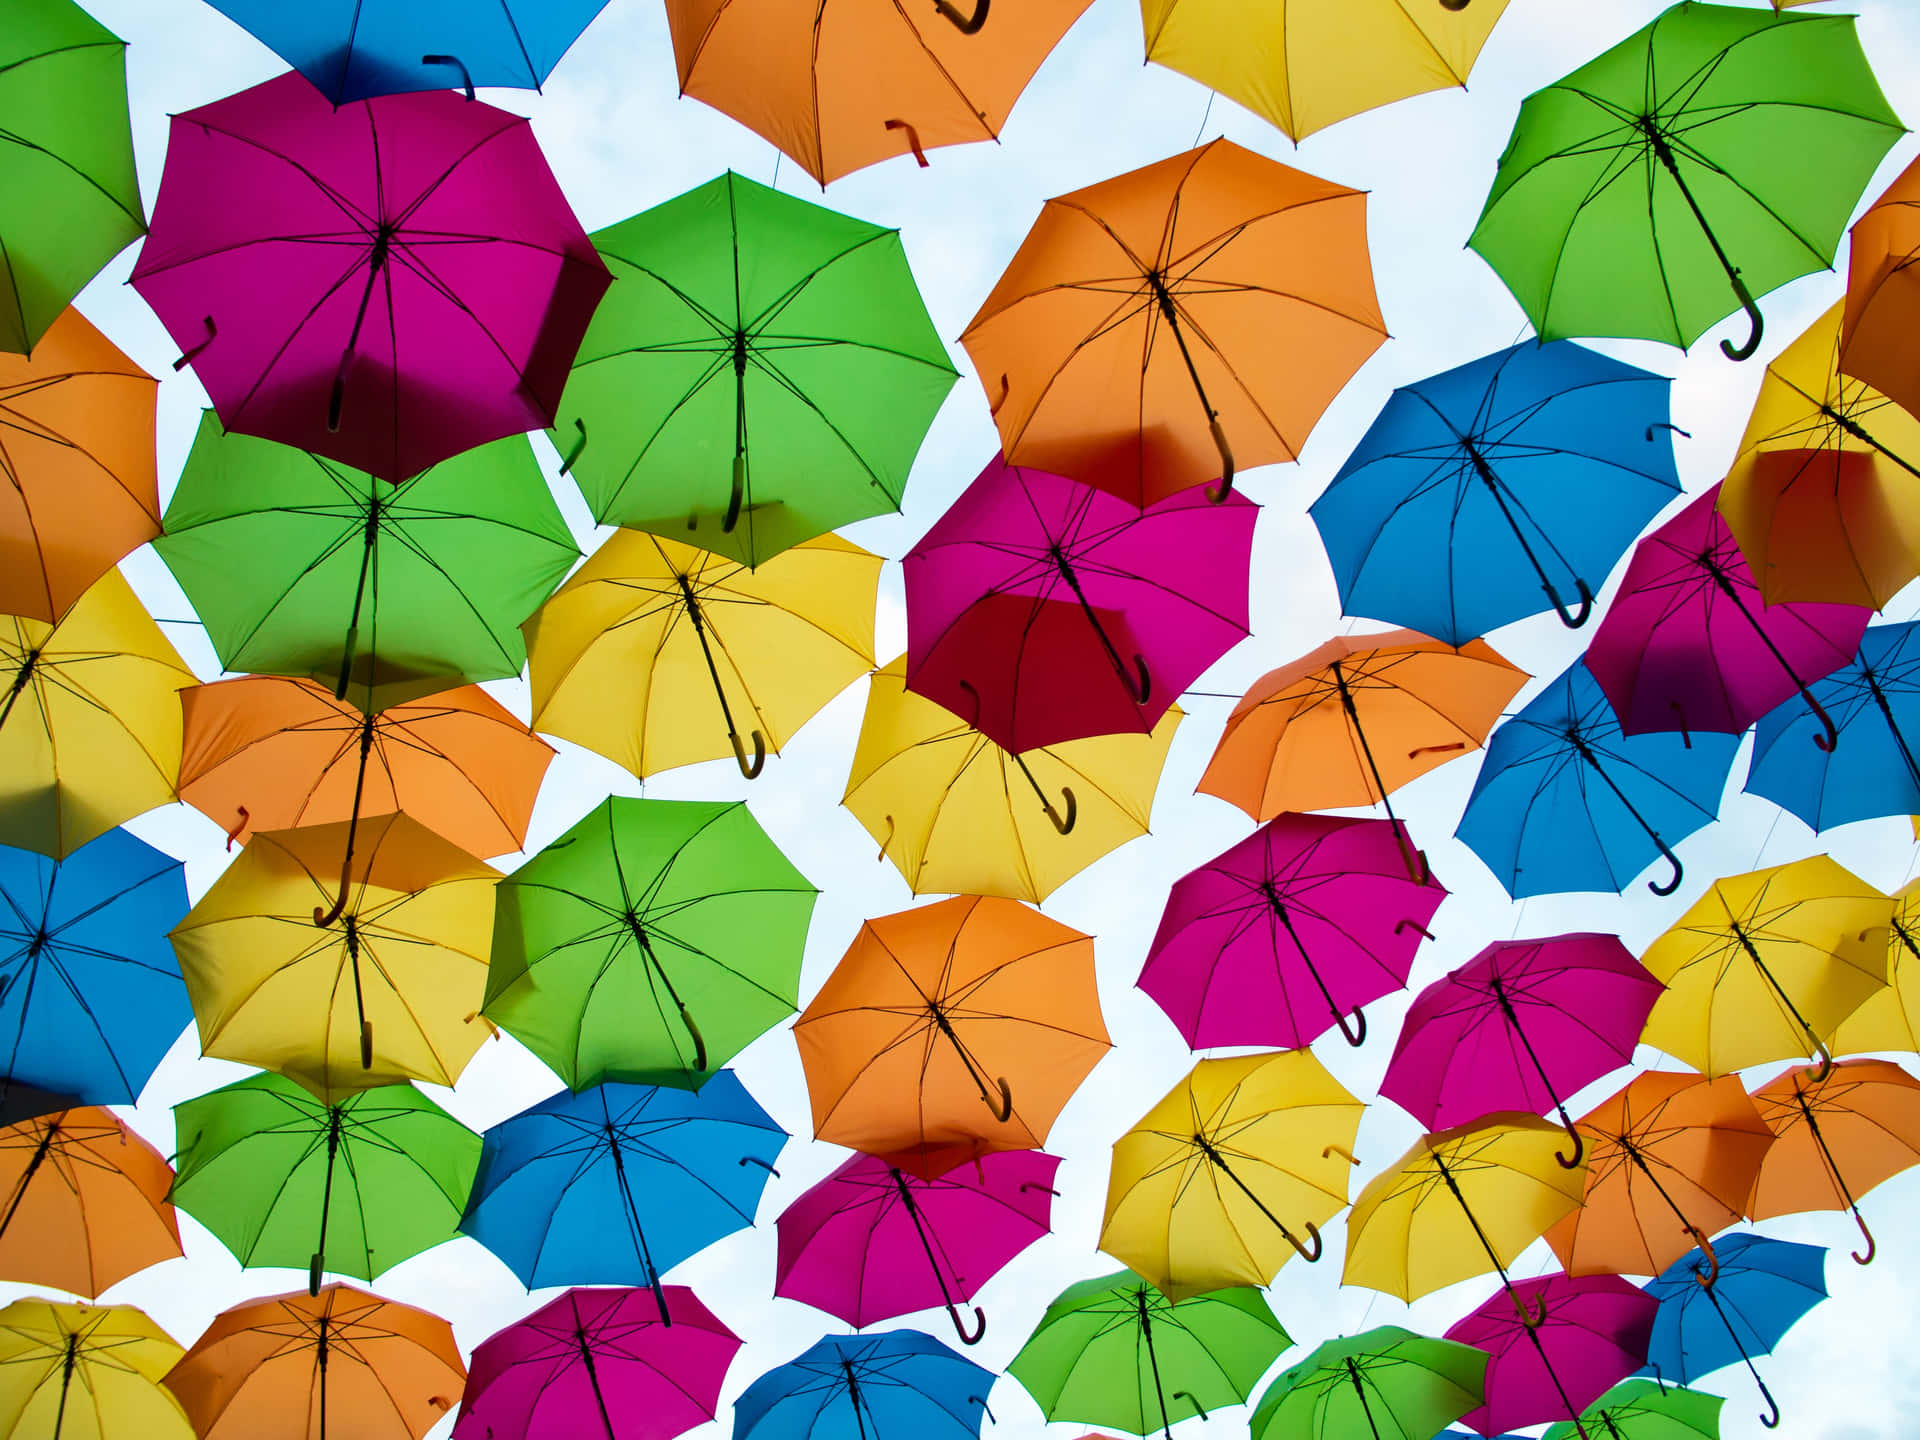 Repetitive Colorful Umbrellas [wallpaper] Wallpaper